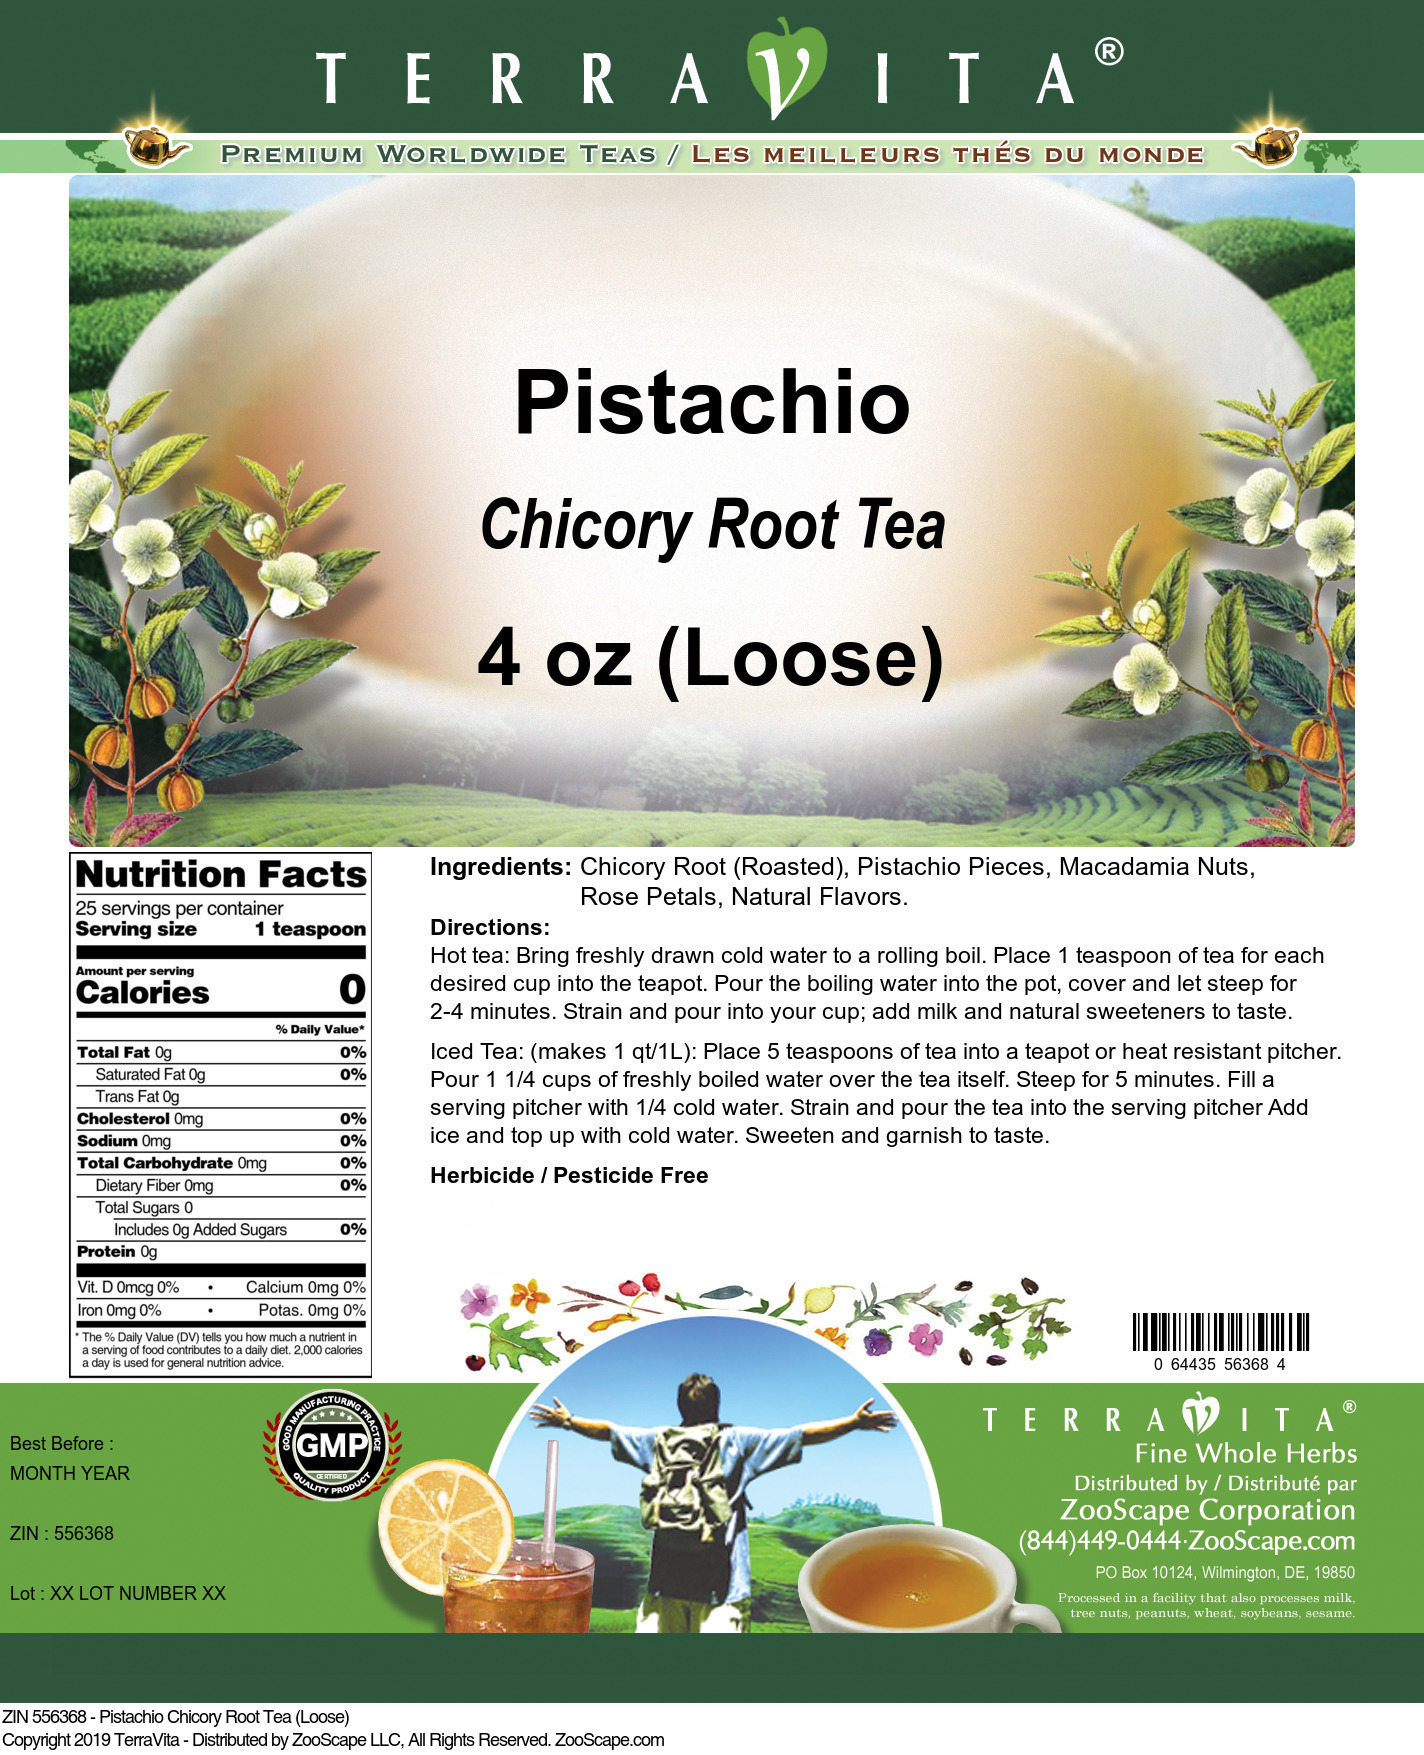 Pistachio Chicory Root Tea (Loose) - Label